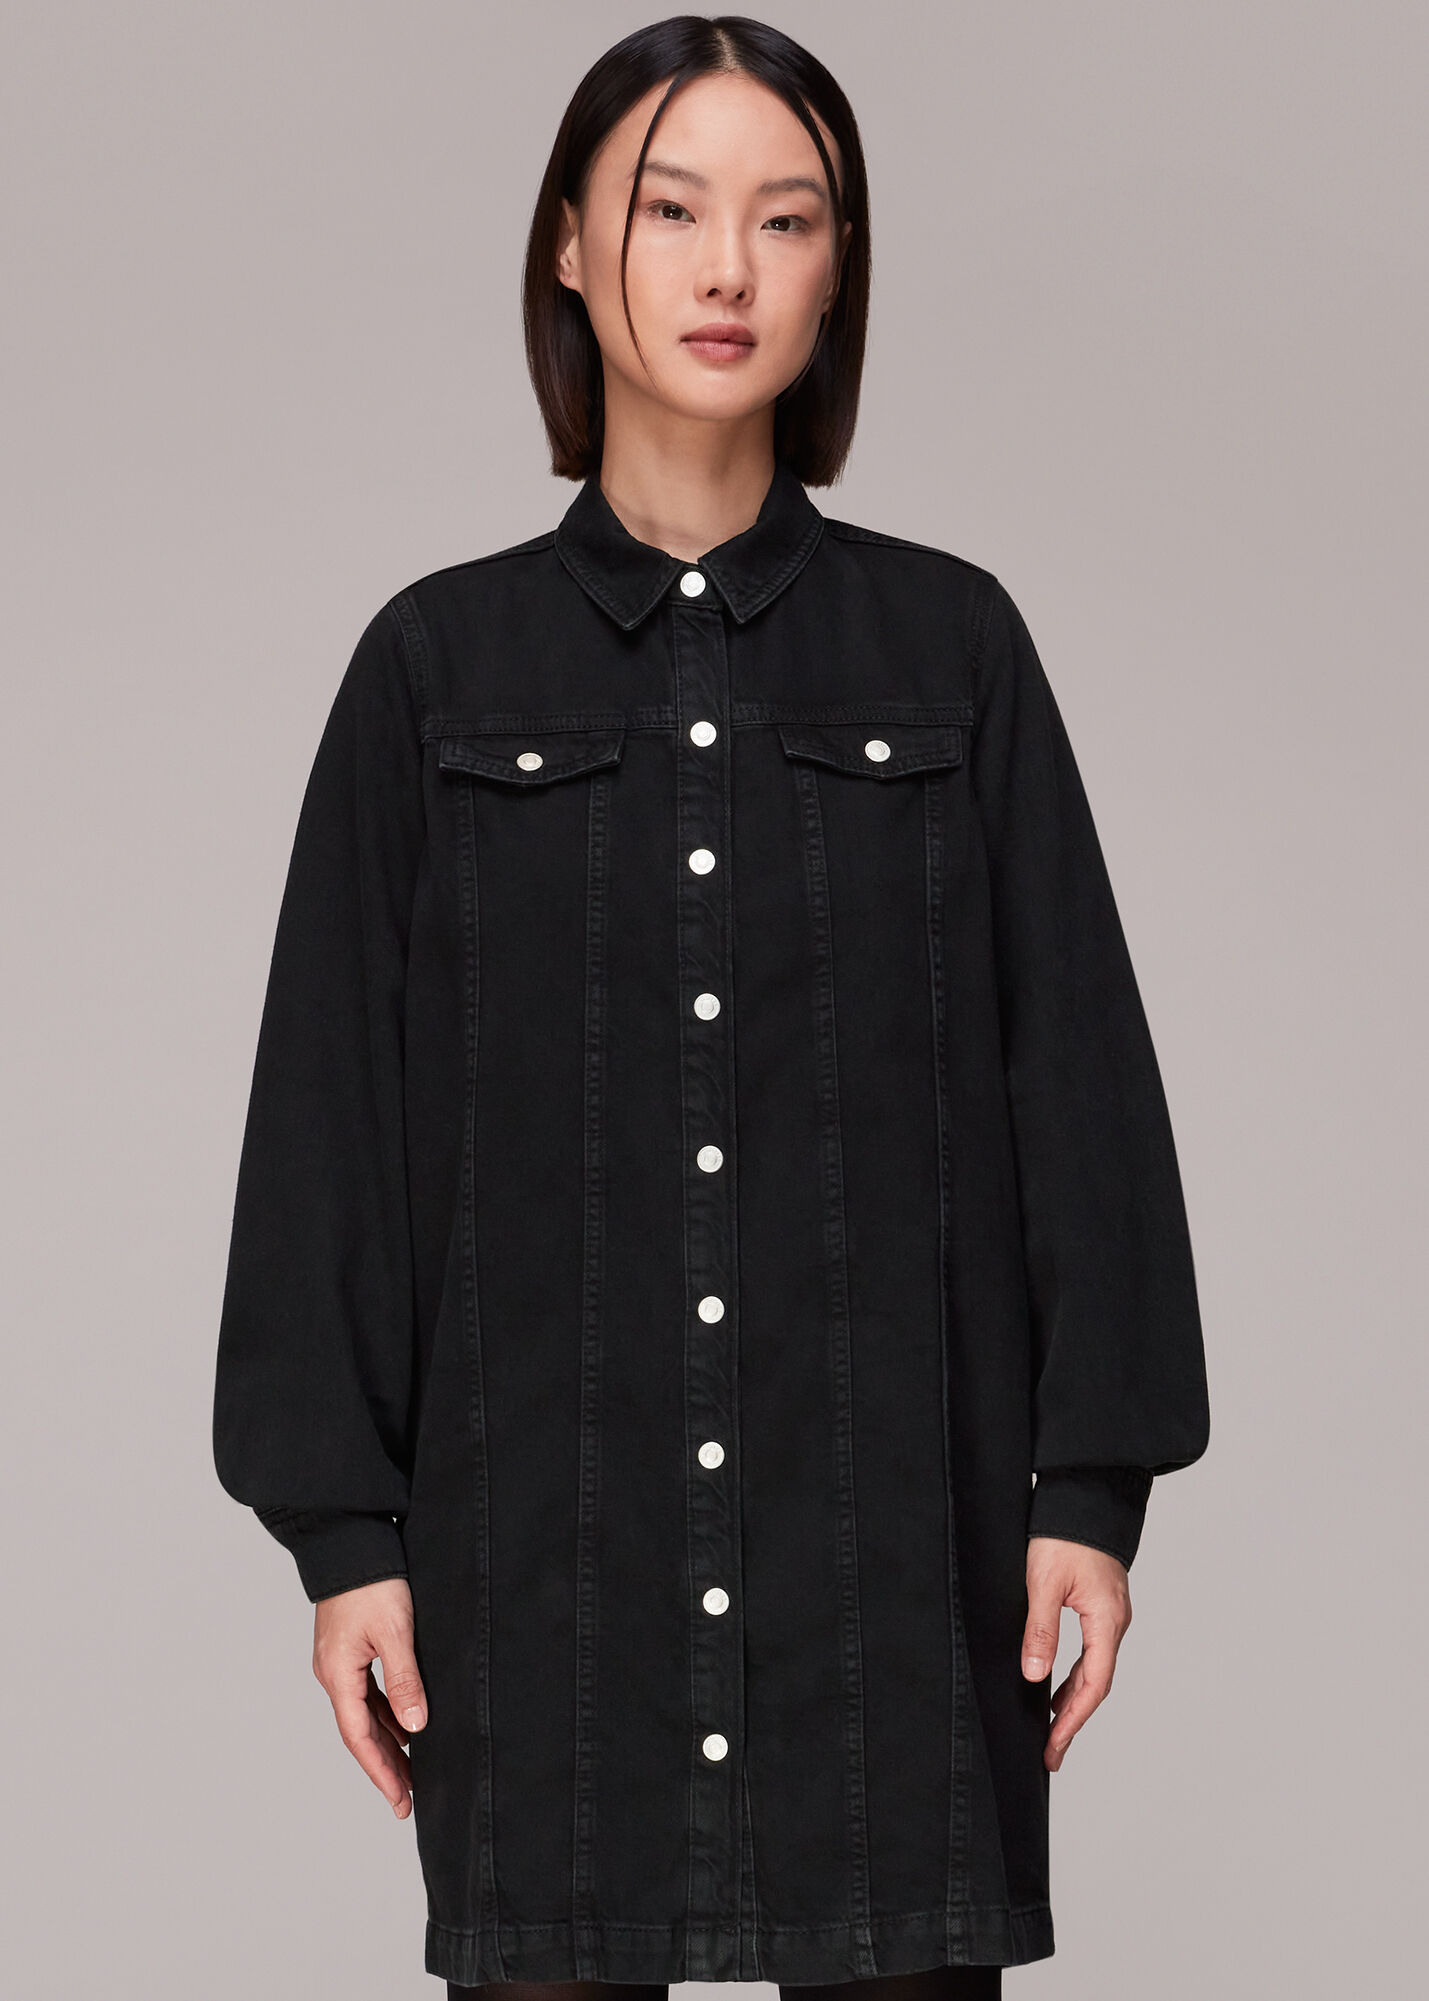 bulktz.com - Whistles cotton denim mini dress in black レディース